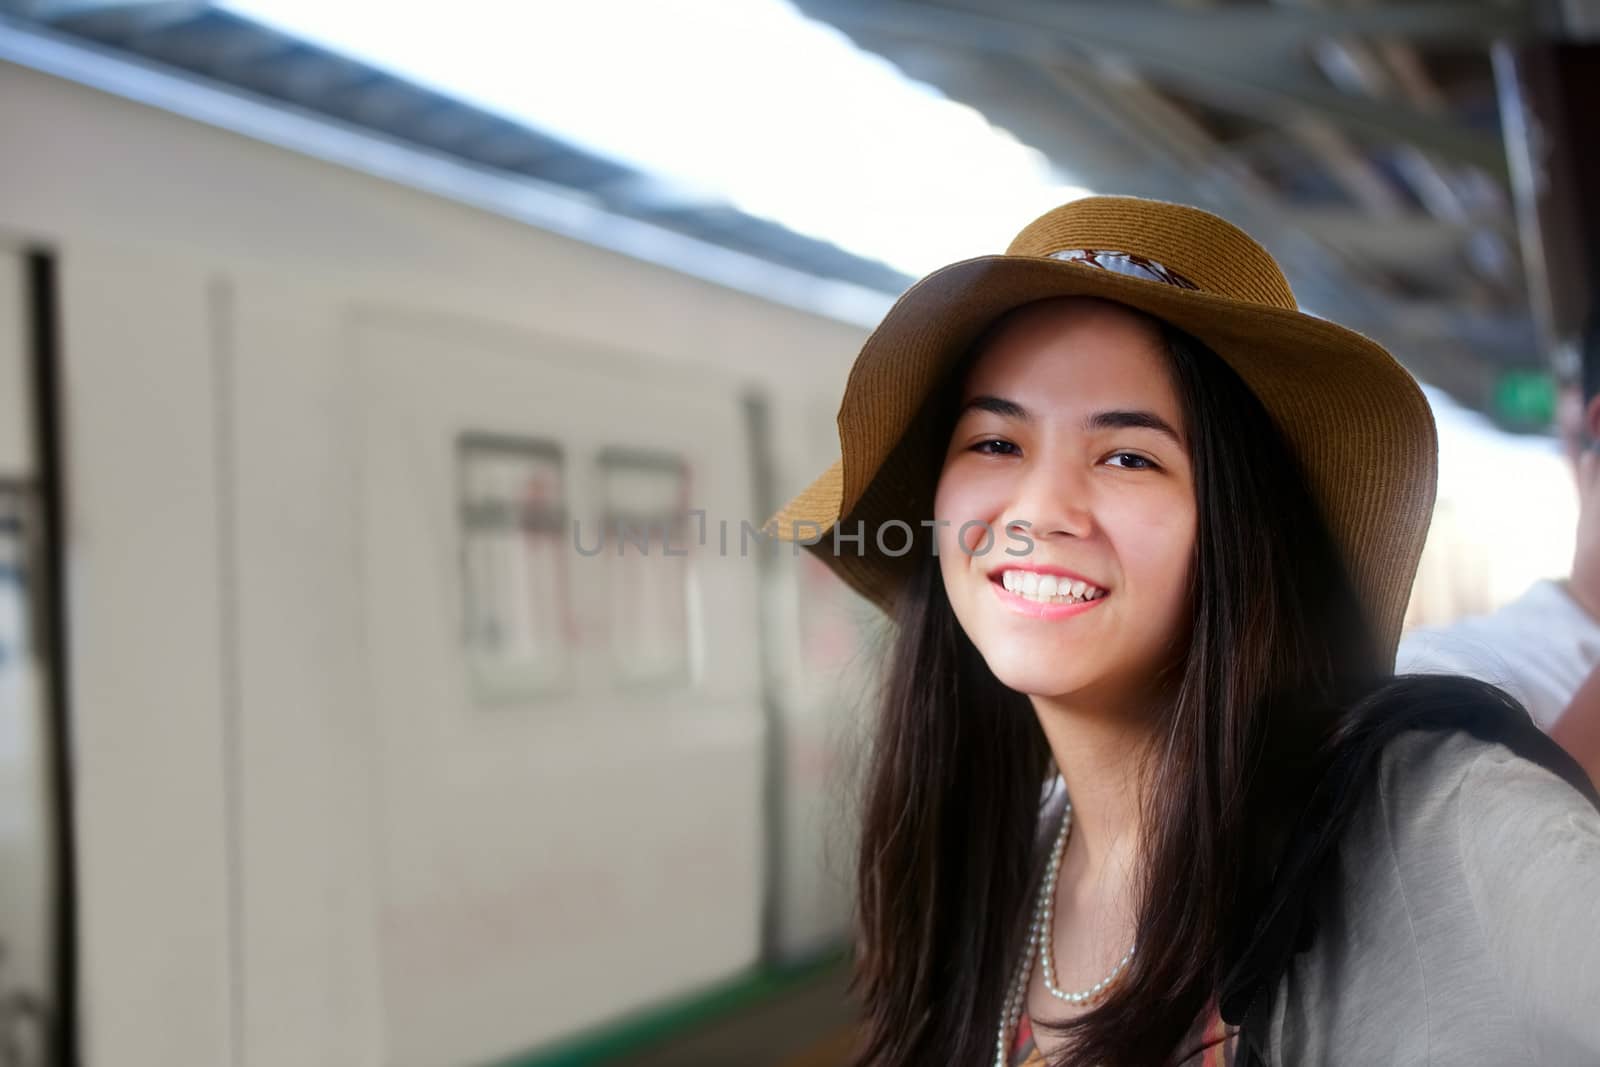 Smiling teen traveler waiting for train at station by jarenwicklund